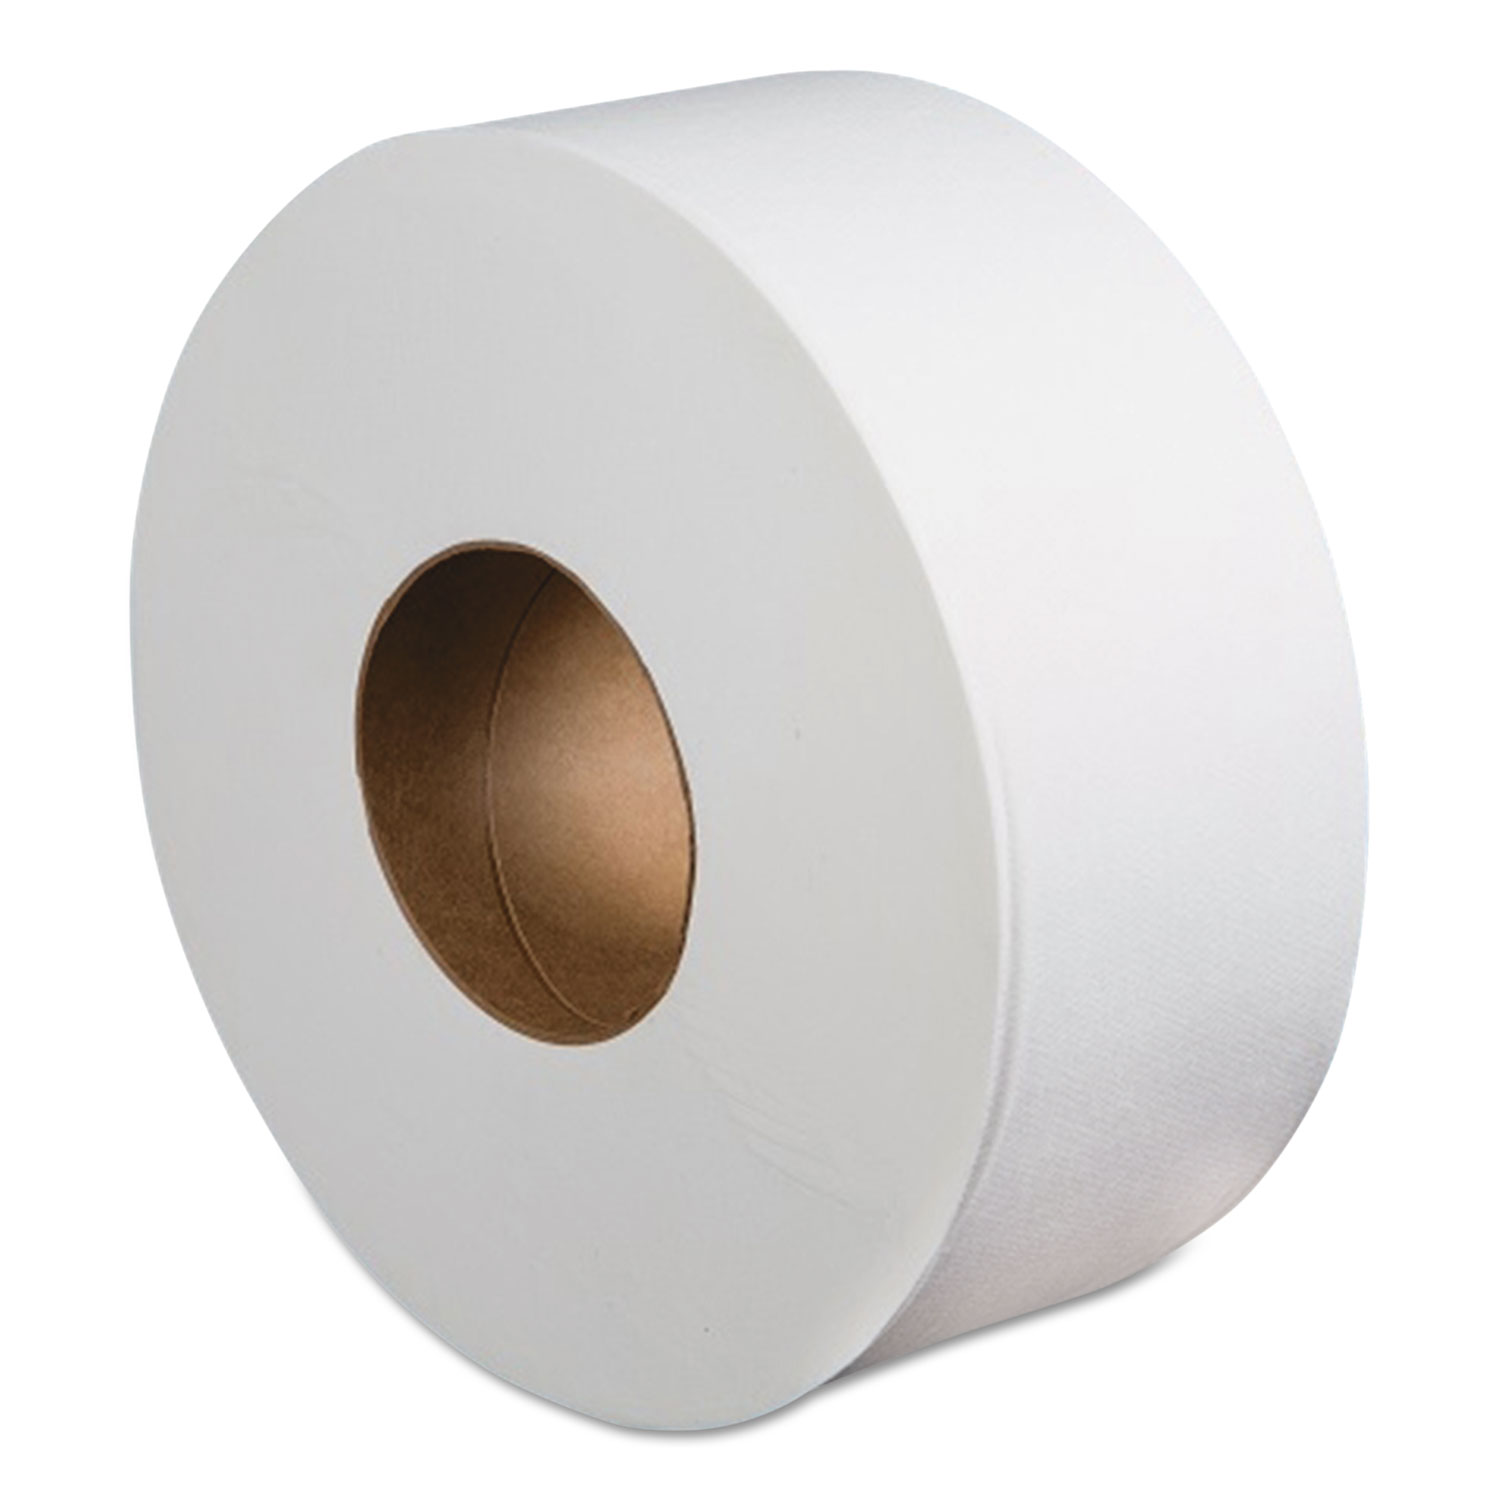 Jumbo Roll Bathroom Tissue, 2-Ply, White, 3.4 x 1000 ft, 12 Rolls/Carton